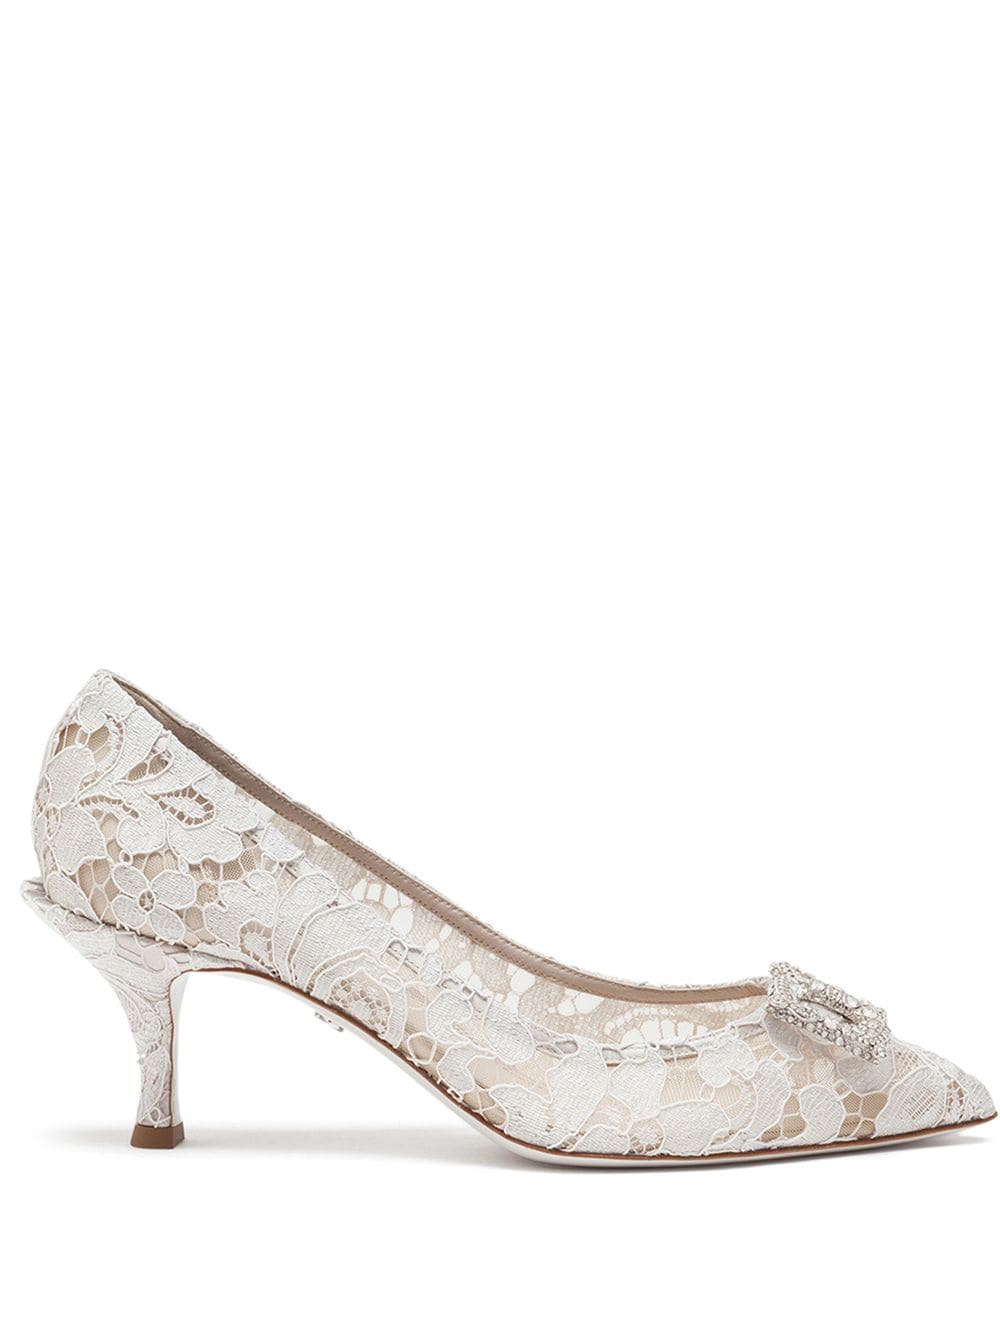 Dolce & Gabbana Taormina 60mm floral-lace pumps White